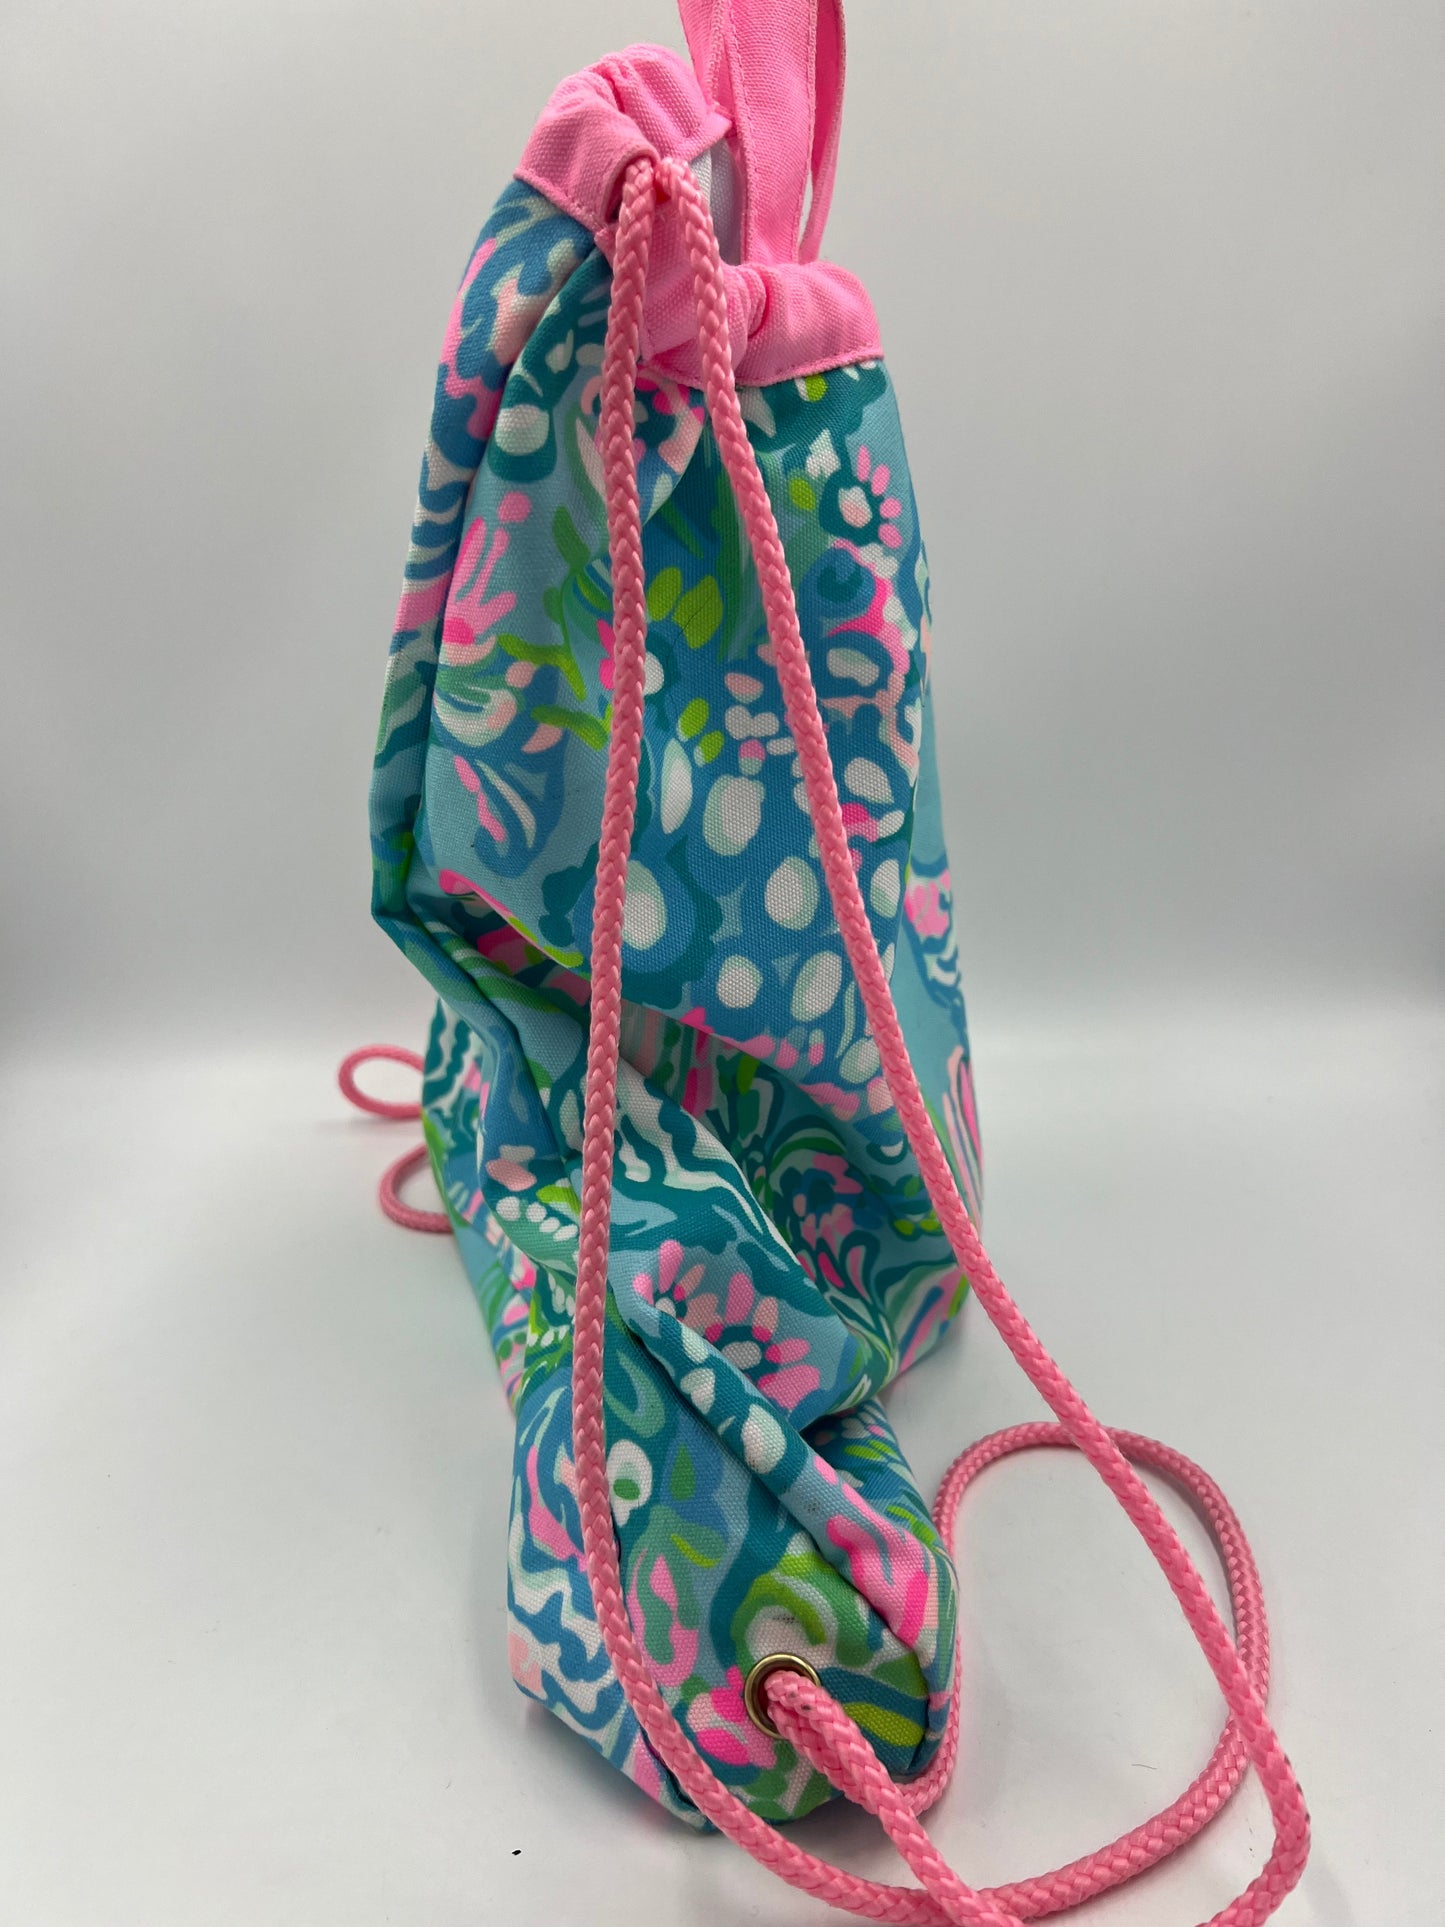 Backpack / Handbag By Lilly Pulitzer